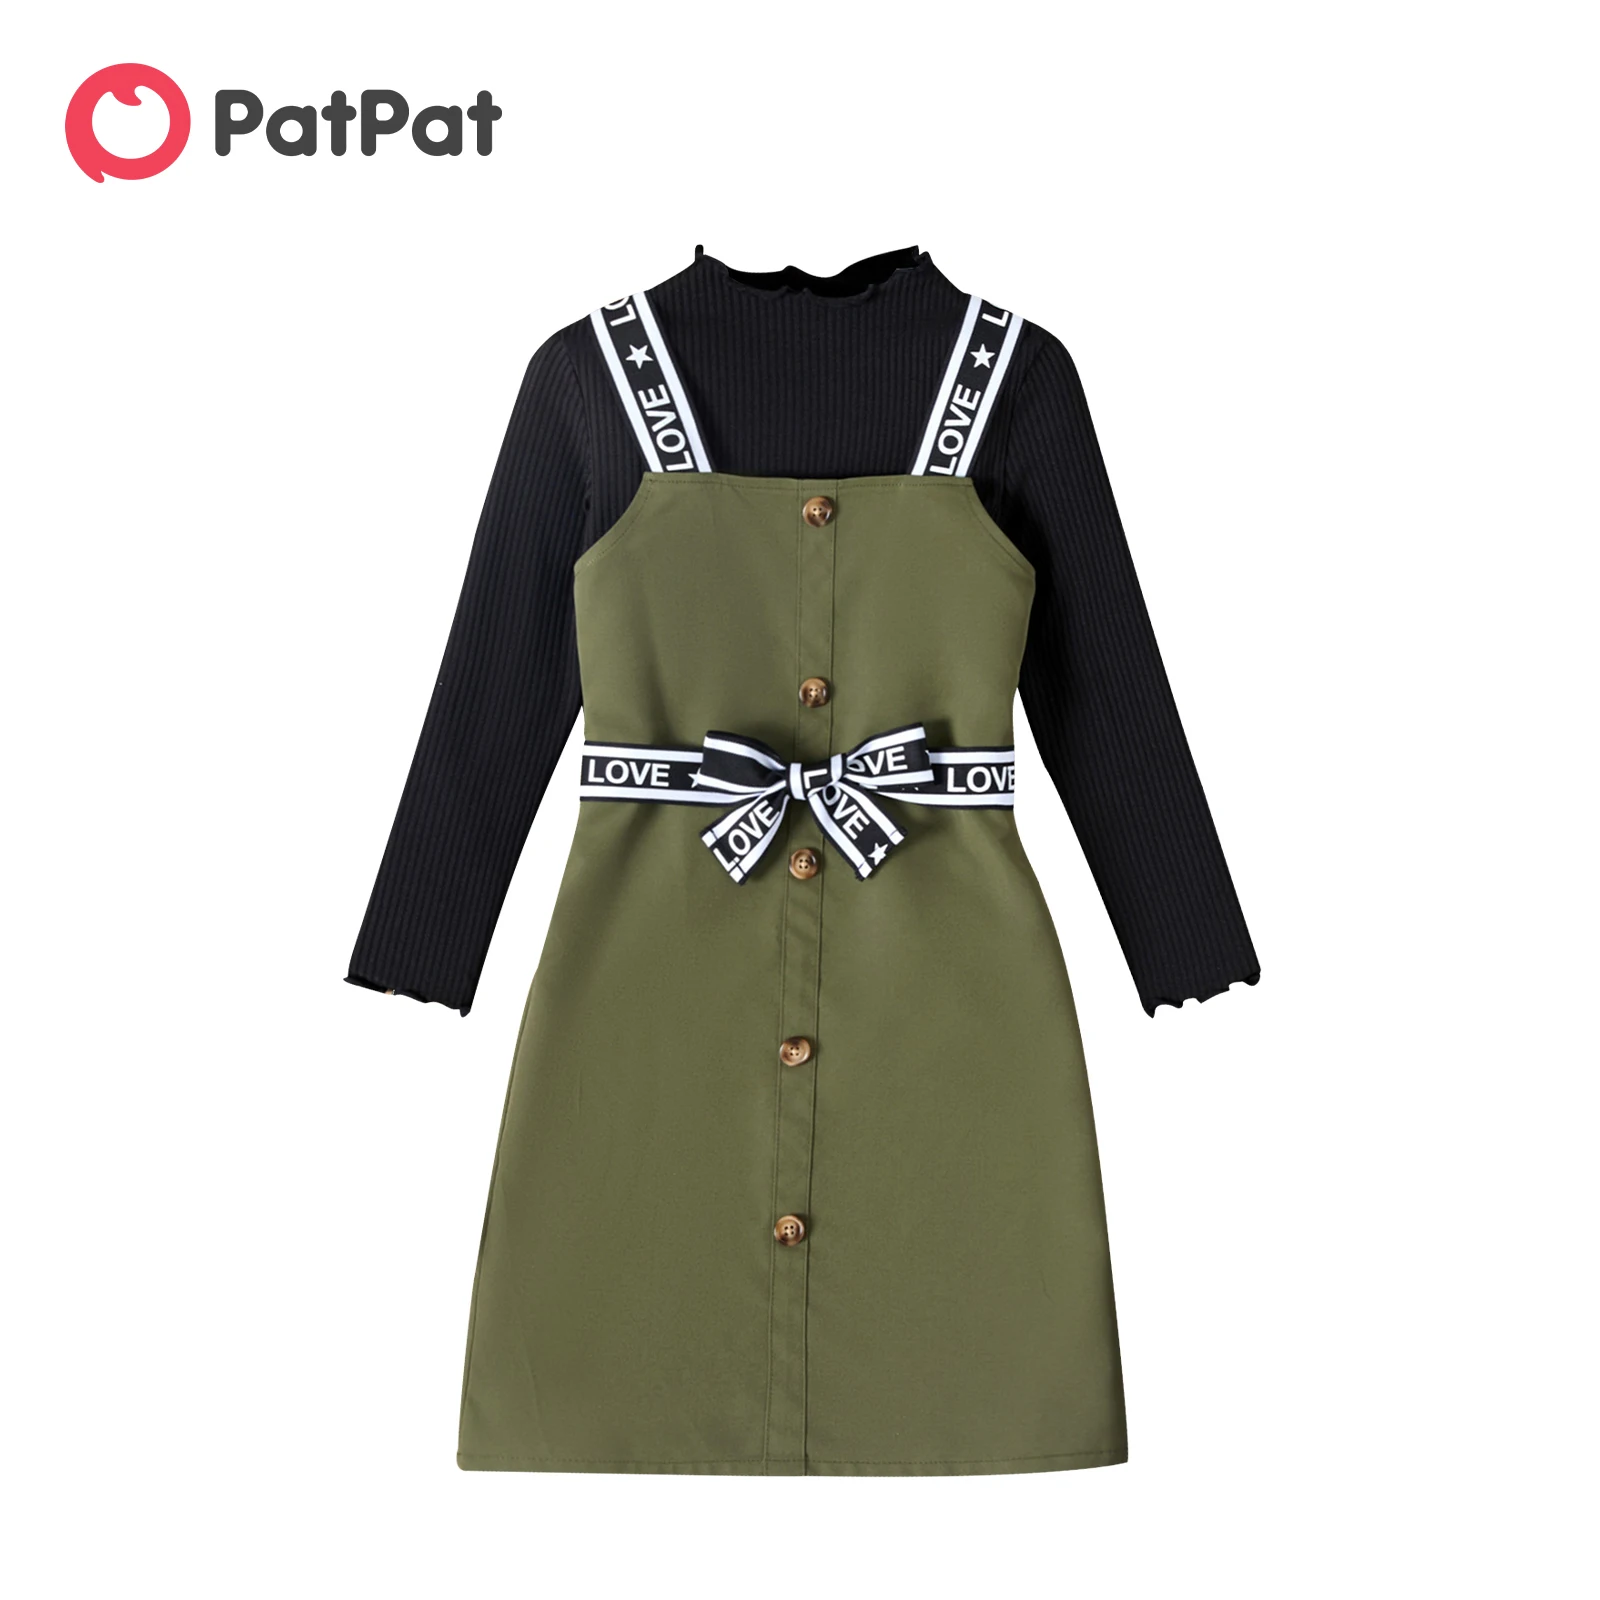 

PatPat 2pcs Kid Girl Dress Mock Neck Lettuce Trim Long-sleeve Black Tee and Letter Print Green Overall Dresses Sets